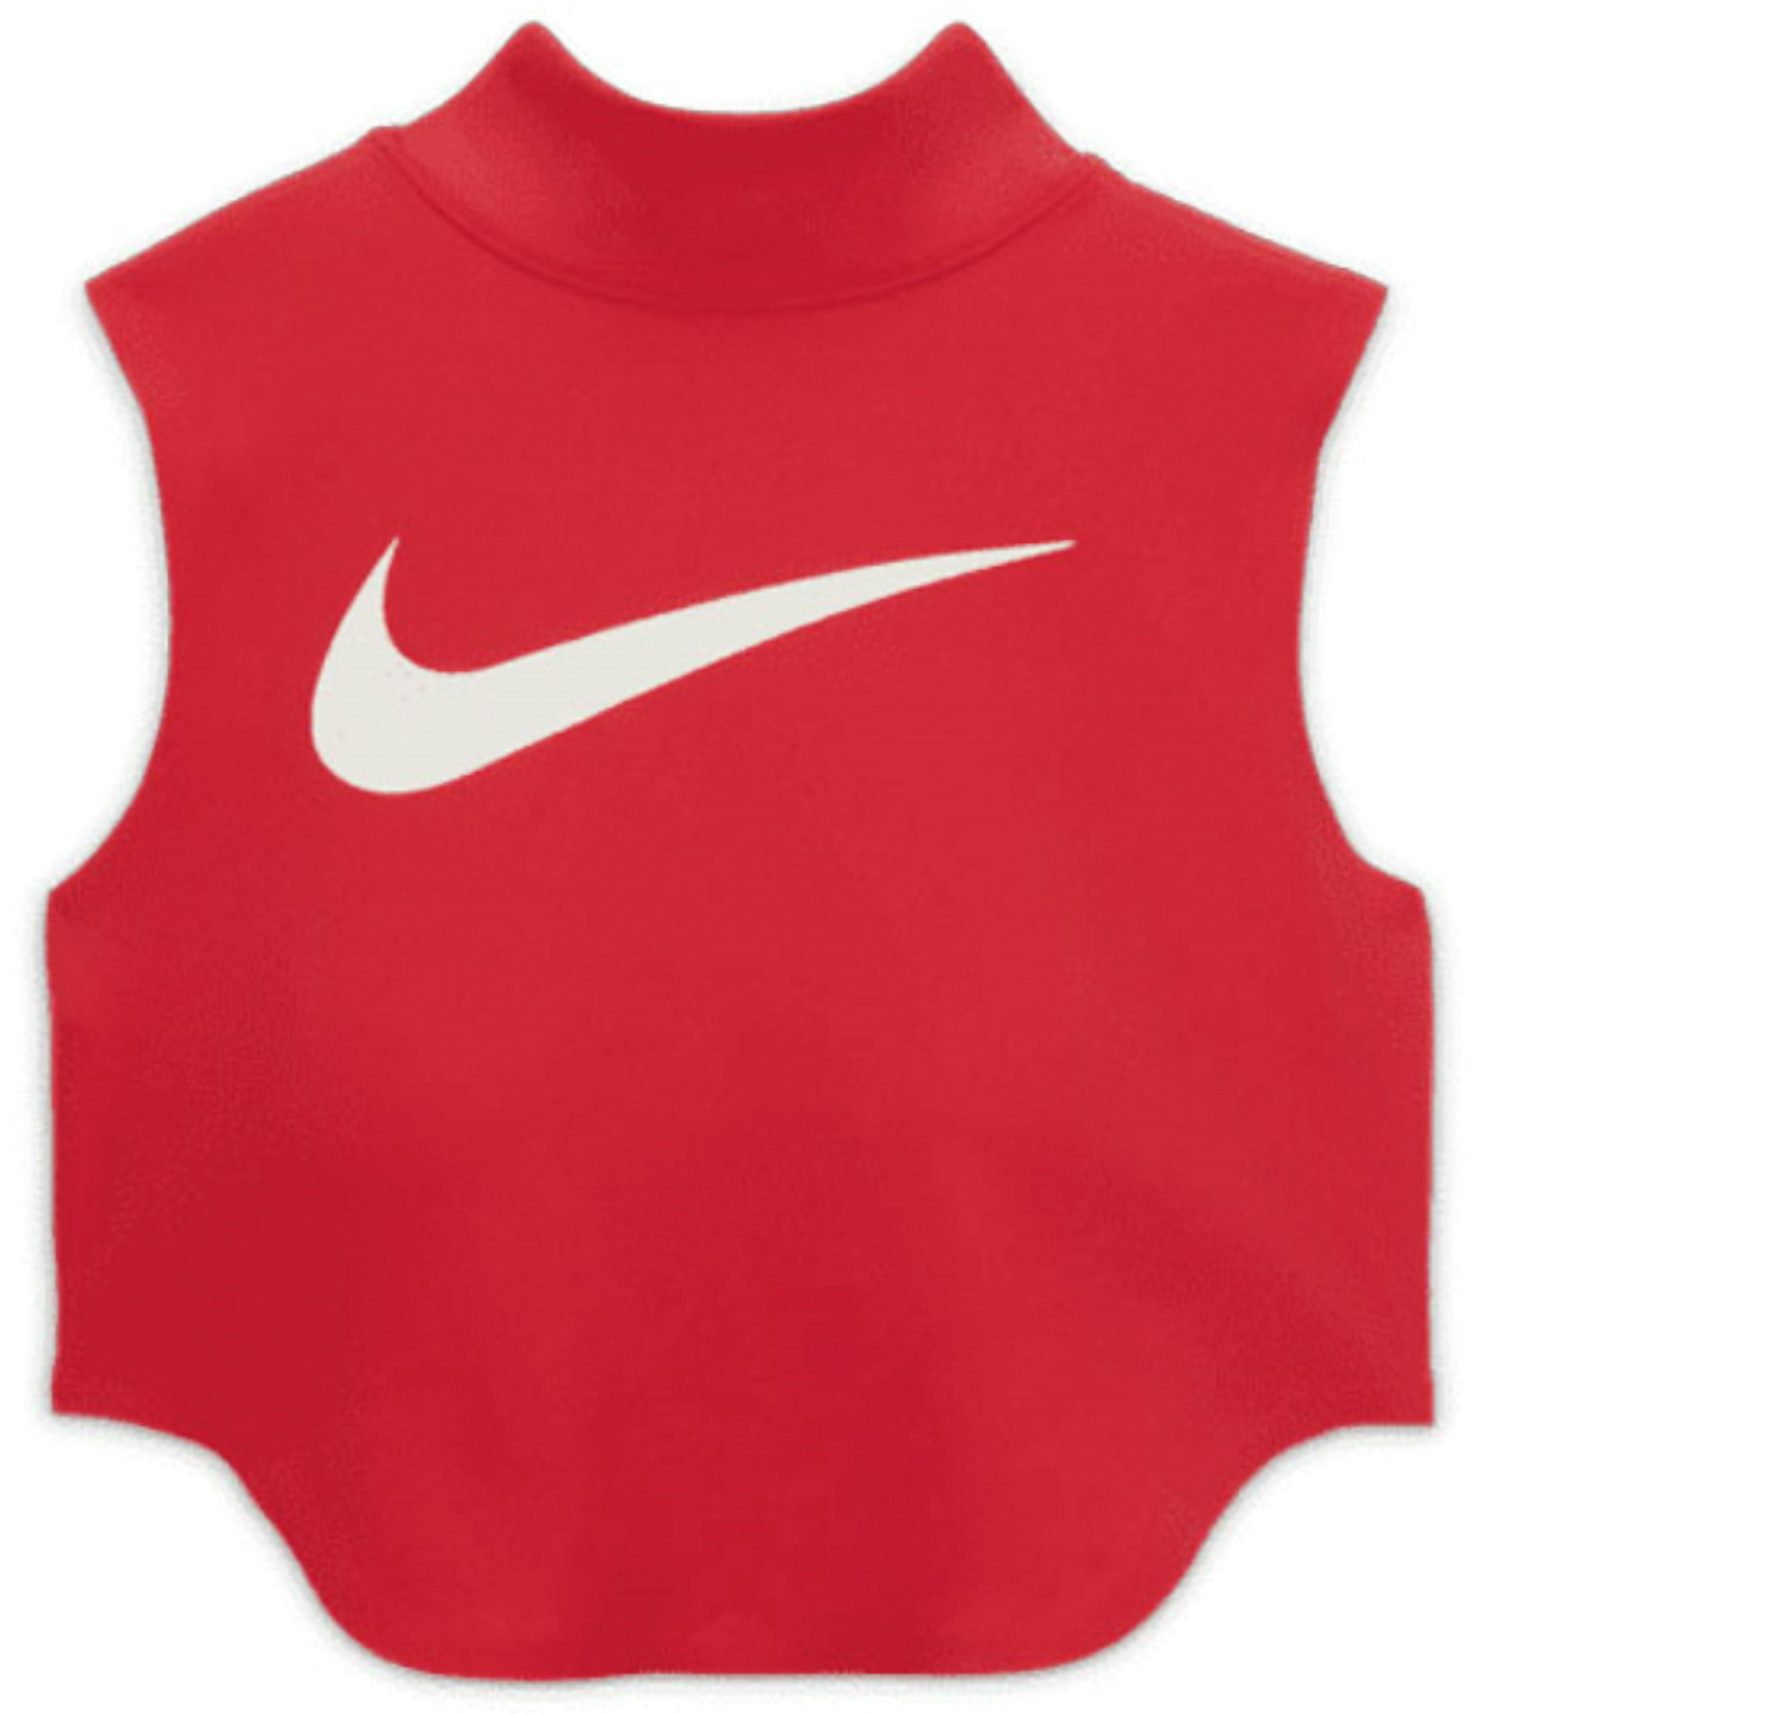 Supreme x Nike SS14 Red Basketball Jersey Size Medium Foamposite